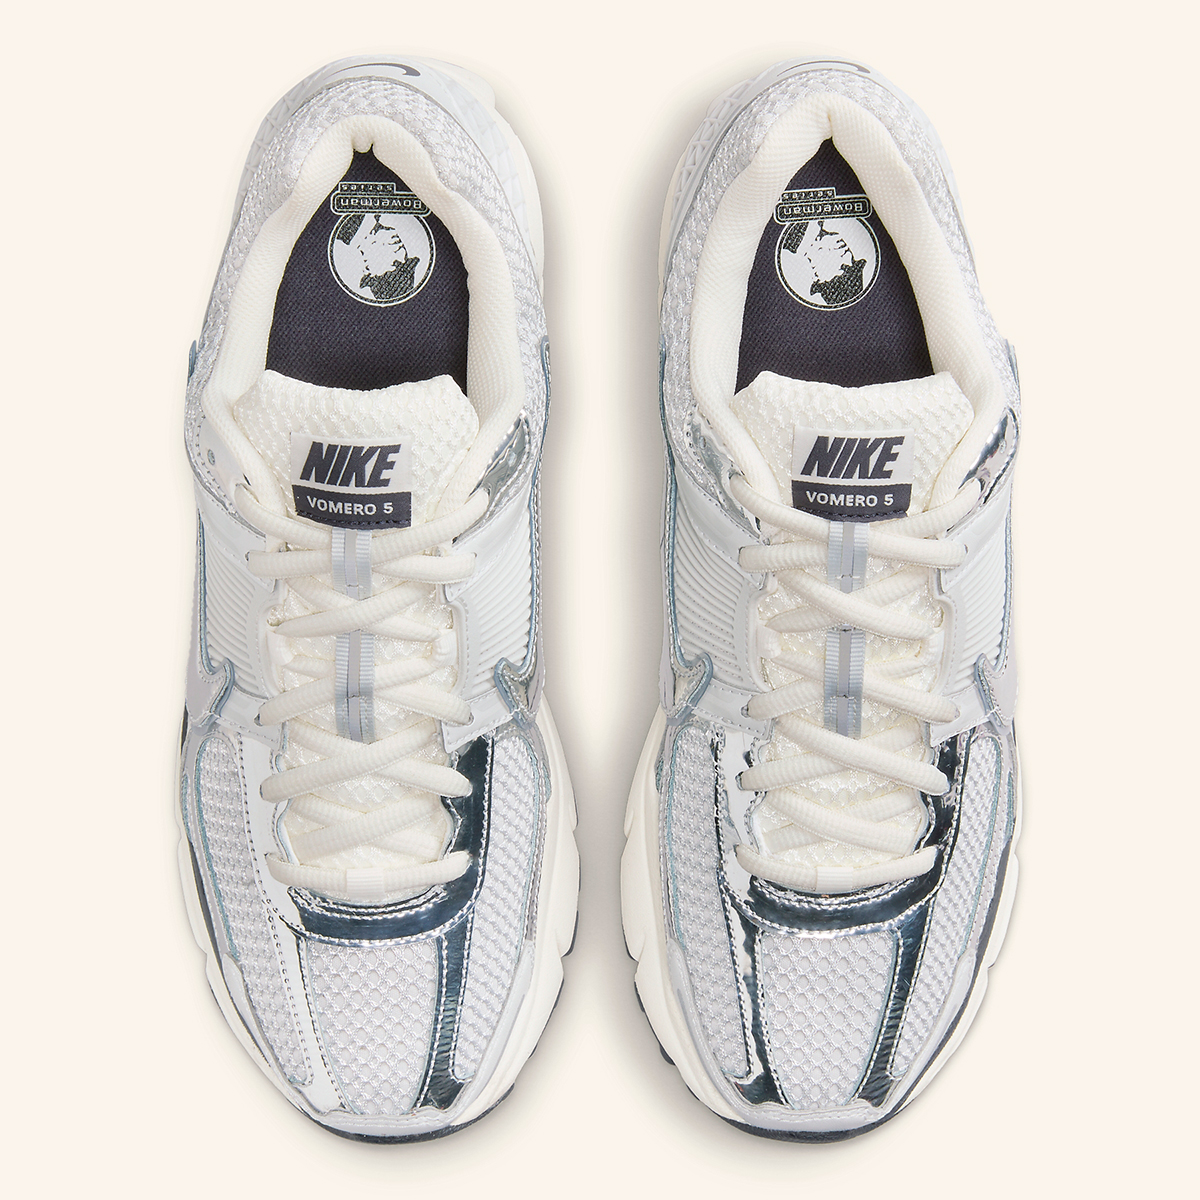 nike tiempo soccer shoes ebay women Summit White Metallic Silver Hj3758 001 3